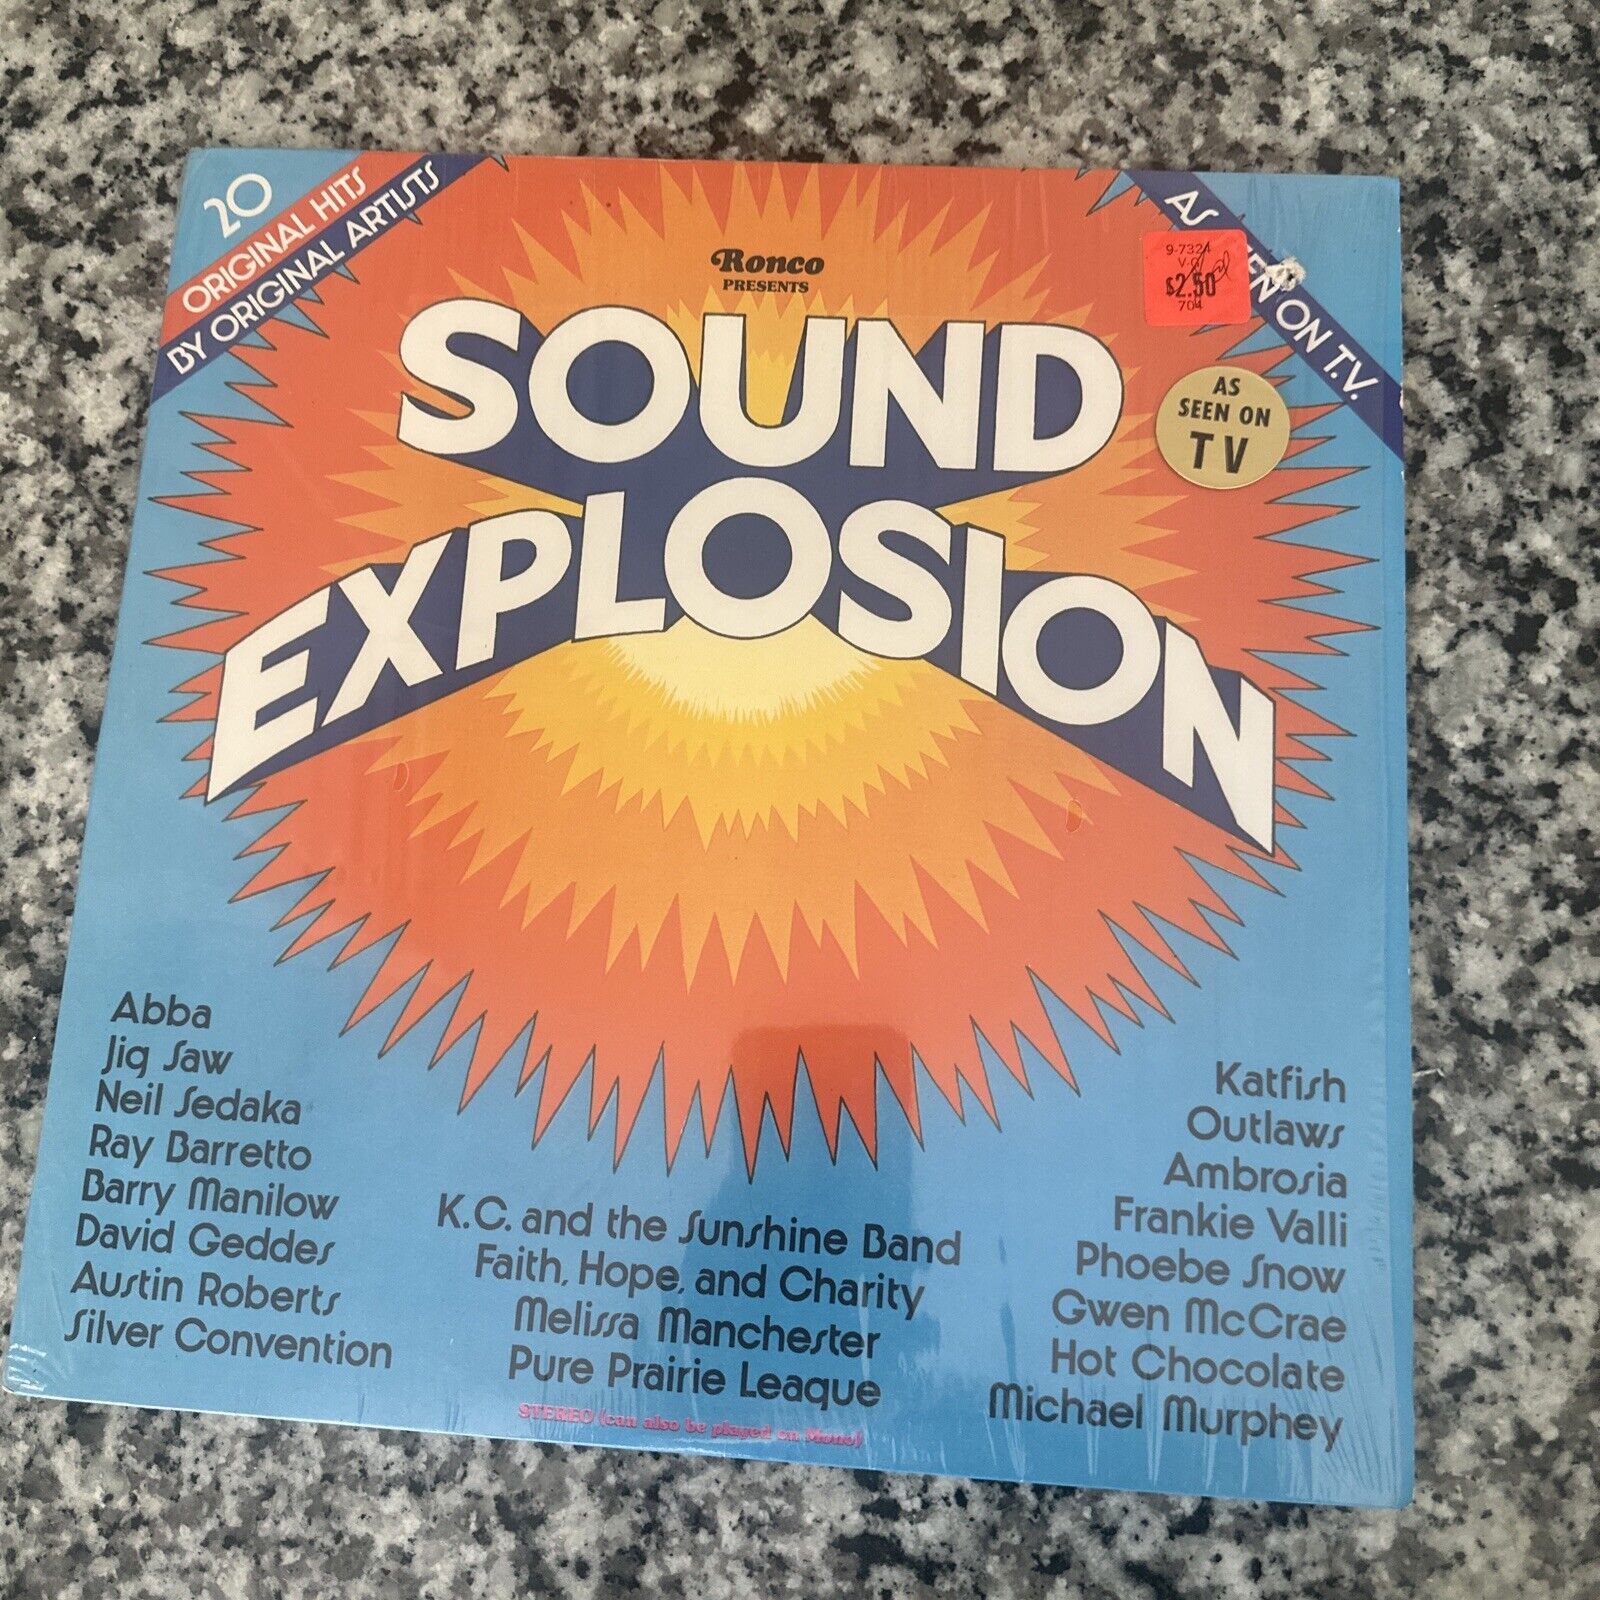 Ronco Records 1976 Sound Explosion By Original Artists Vinyl LP